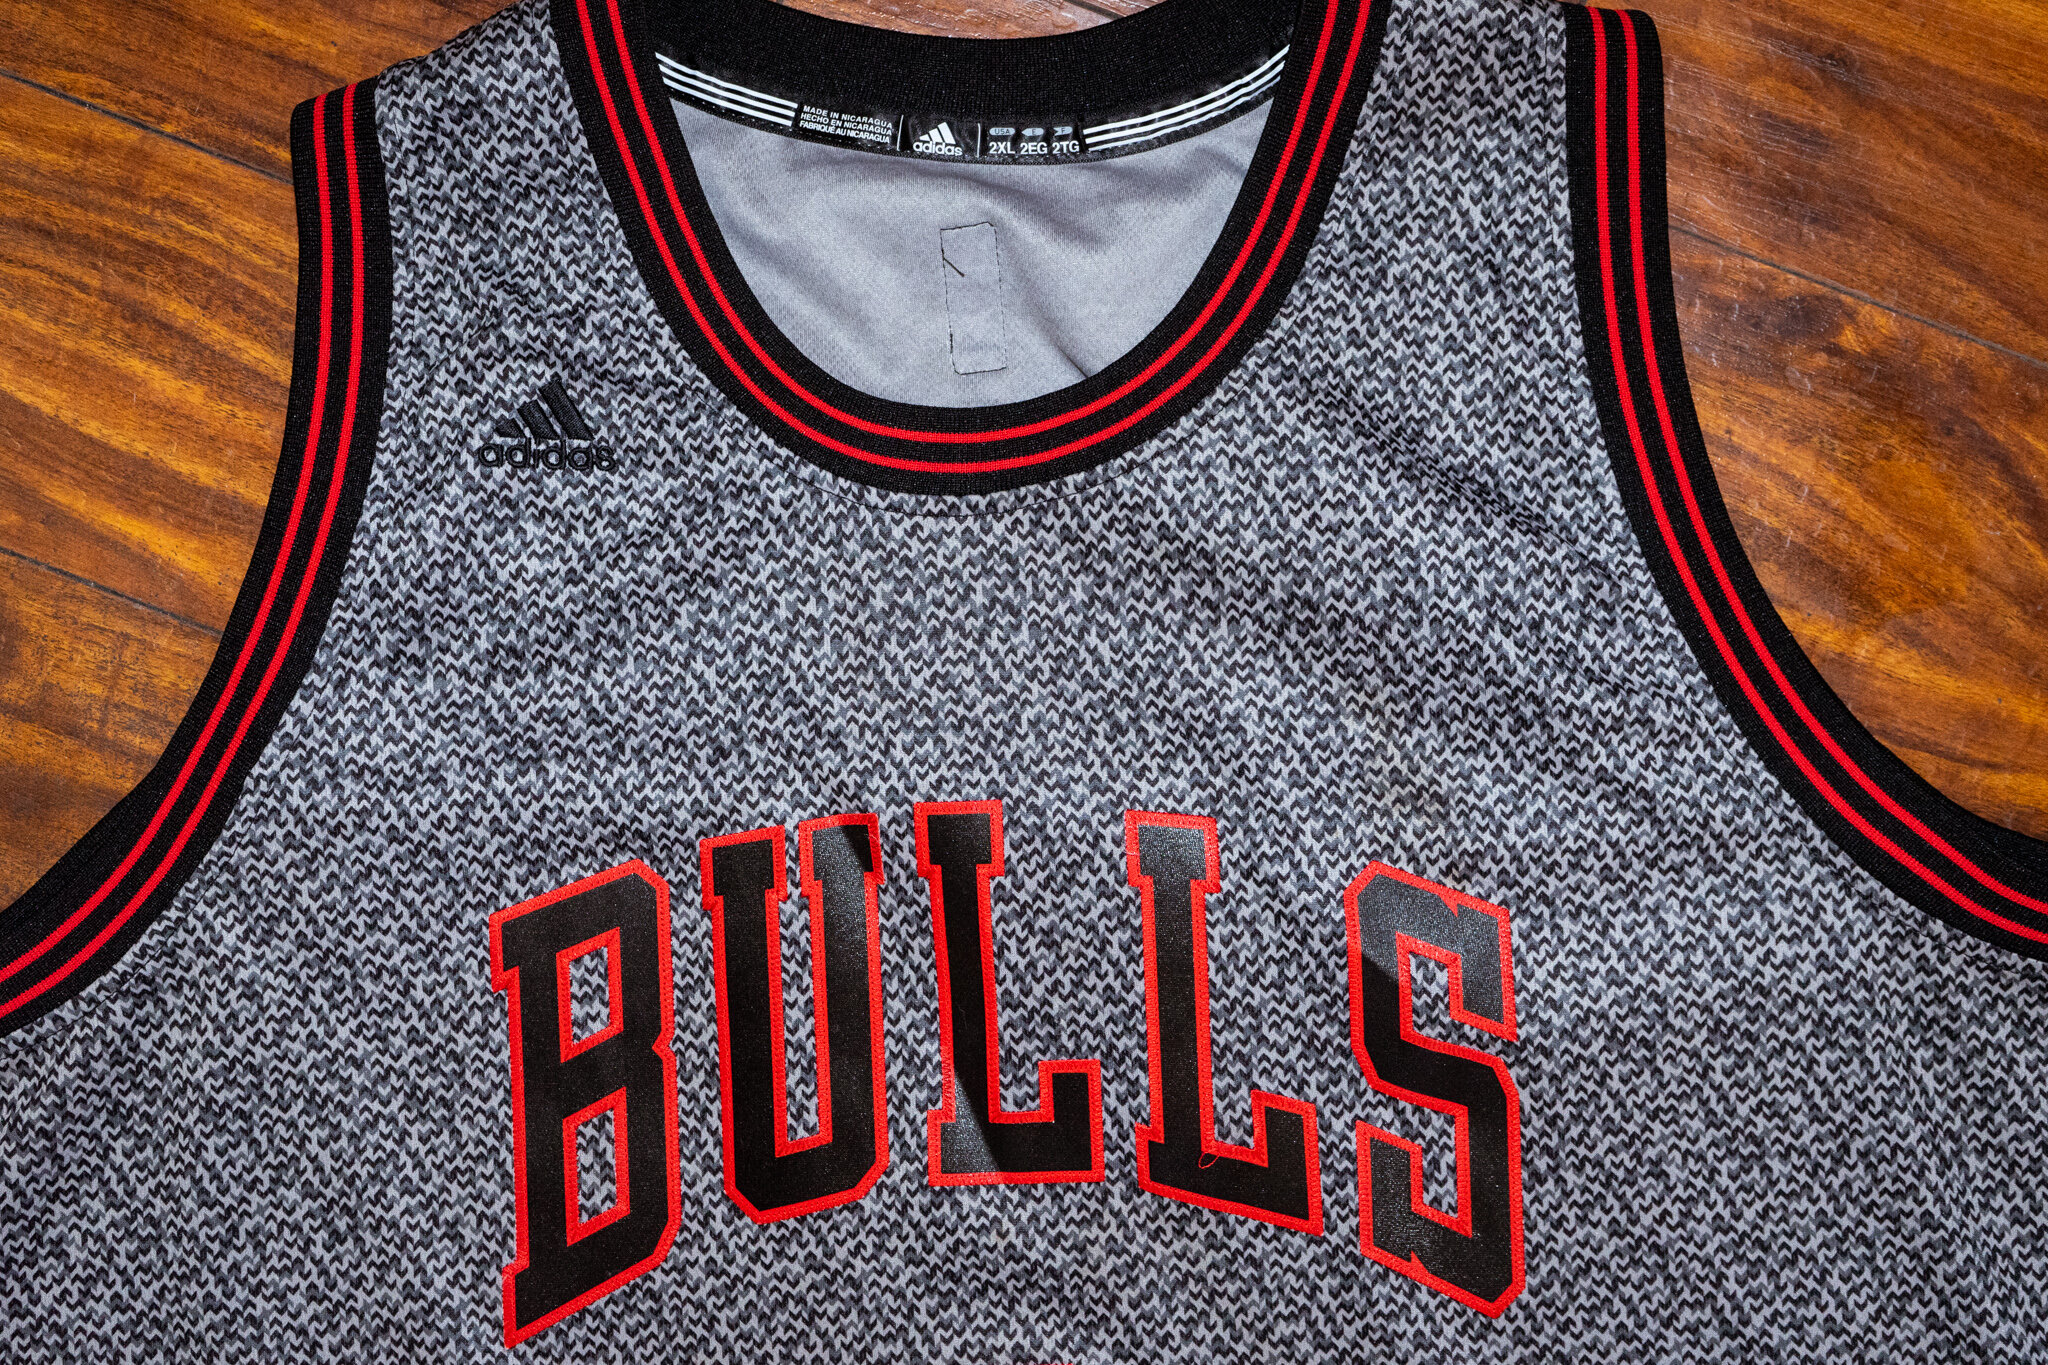 bulls uniform